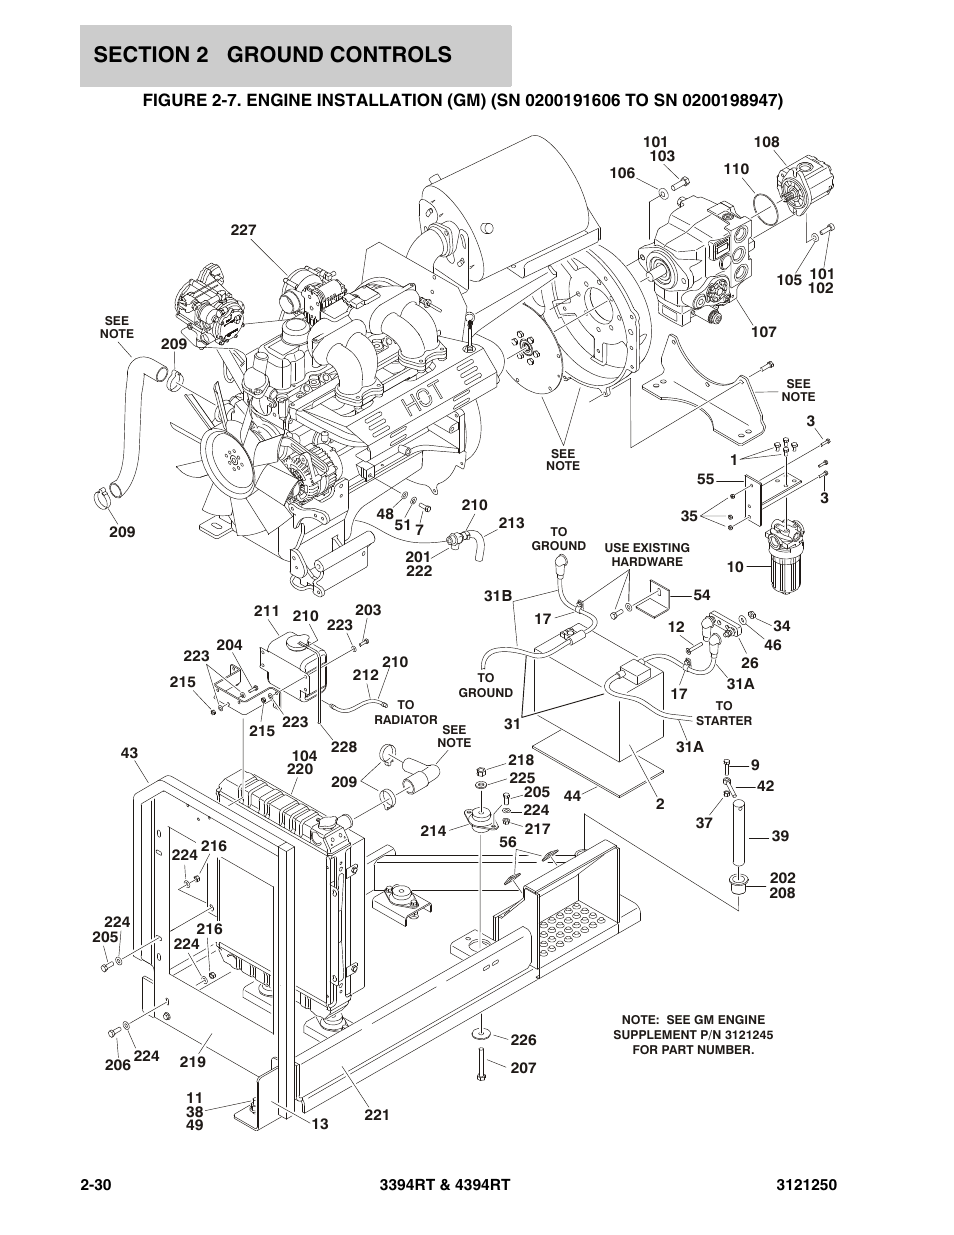 Engine installati | JLG 4394RT Parts Manual User Manual | Page 66 / 244